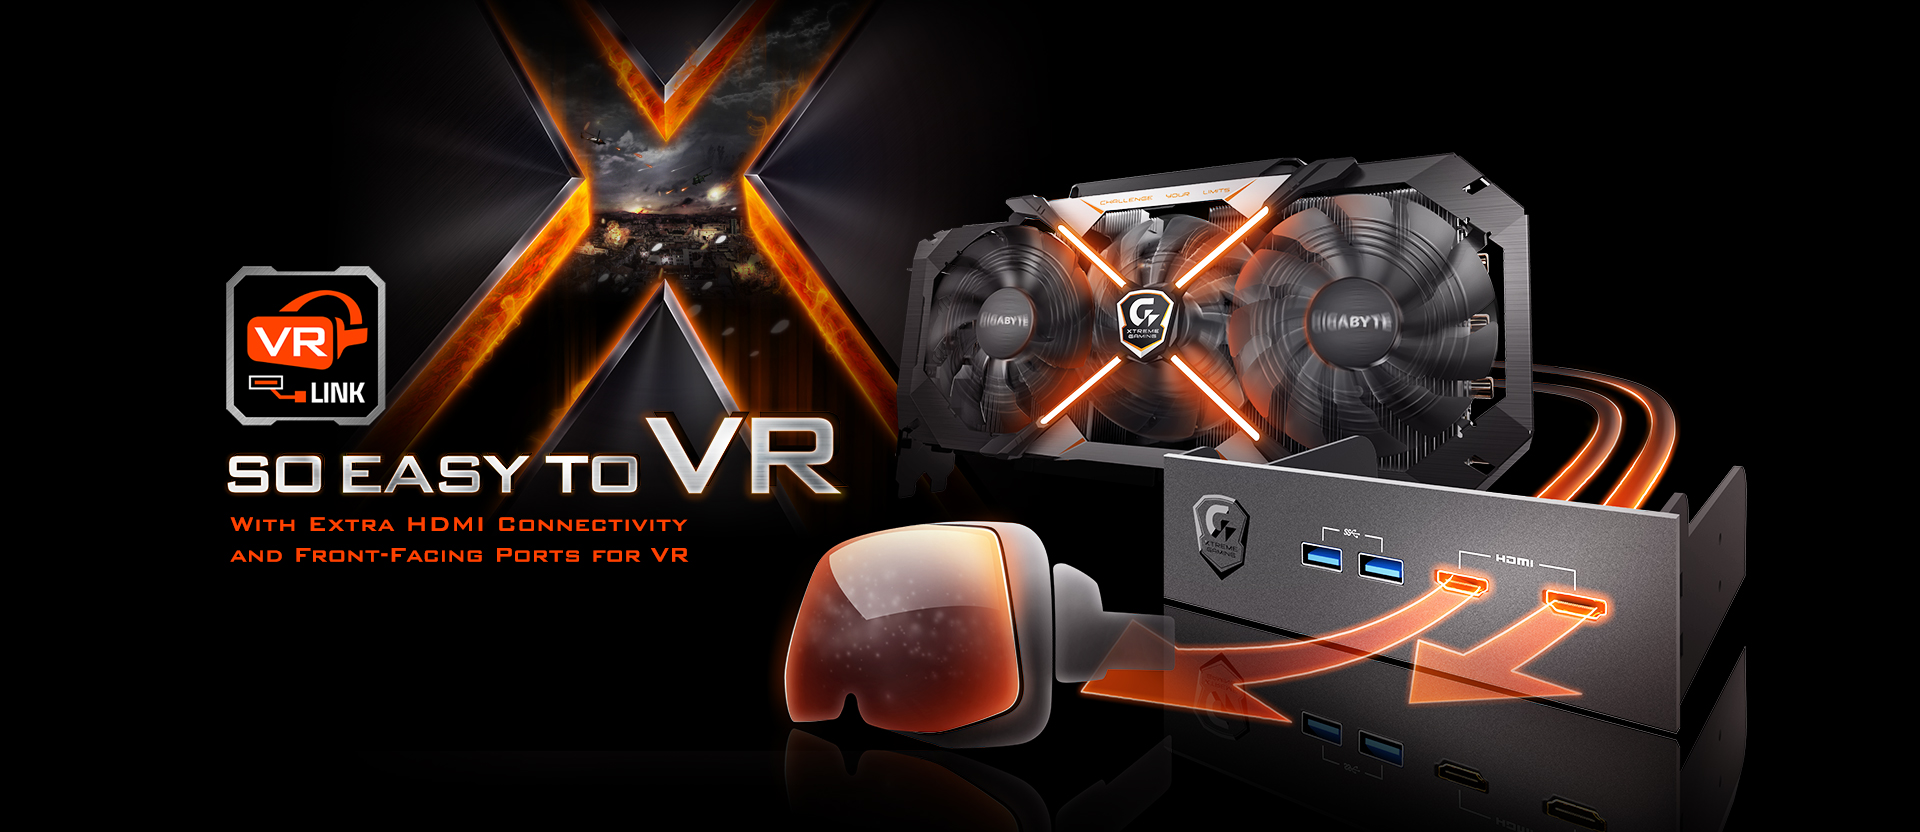 GeForce GTX 1080 Xtreme Gaming VR READY